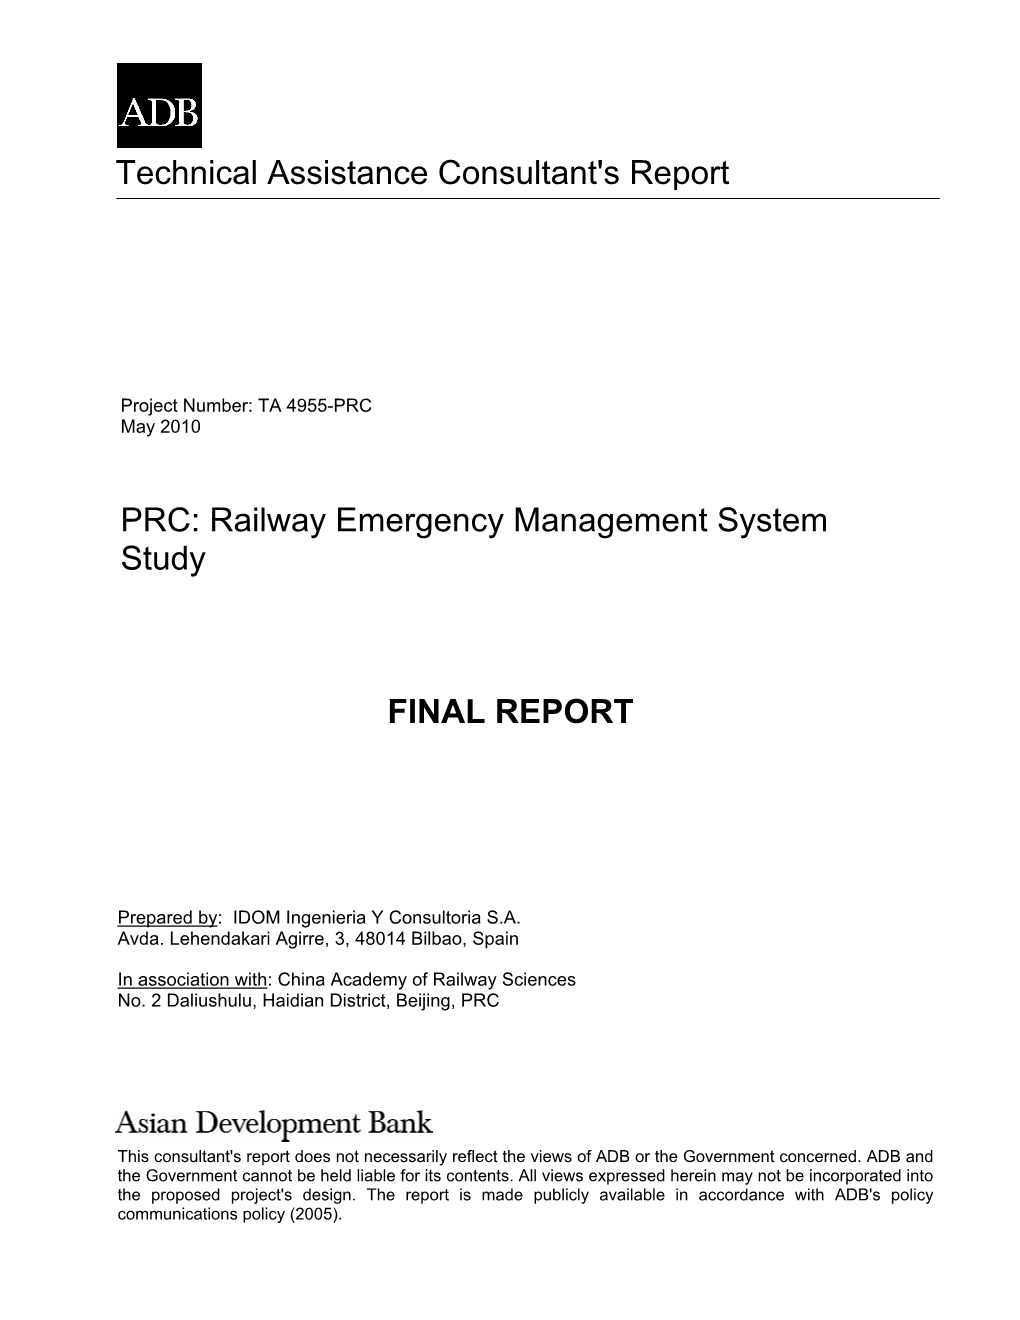 PRC: Railway Emergency Management System Study FINAL